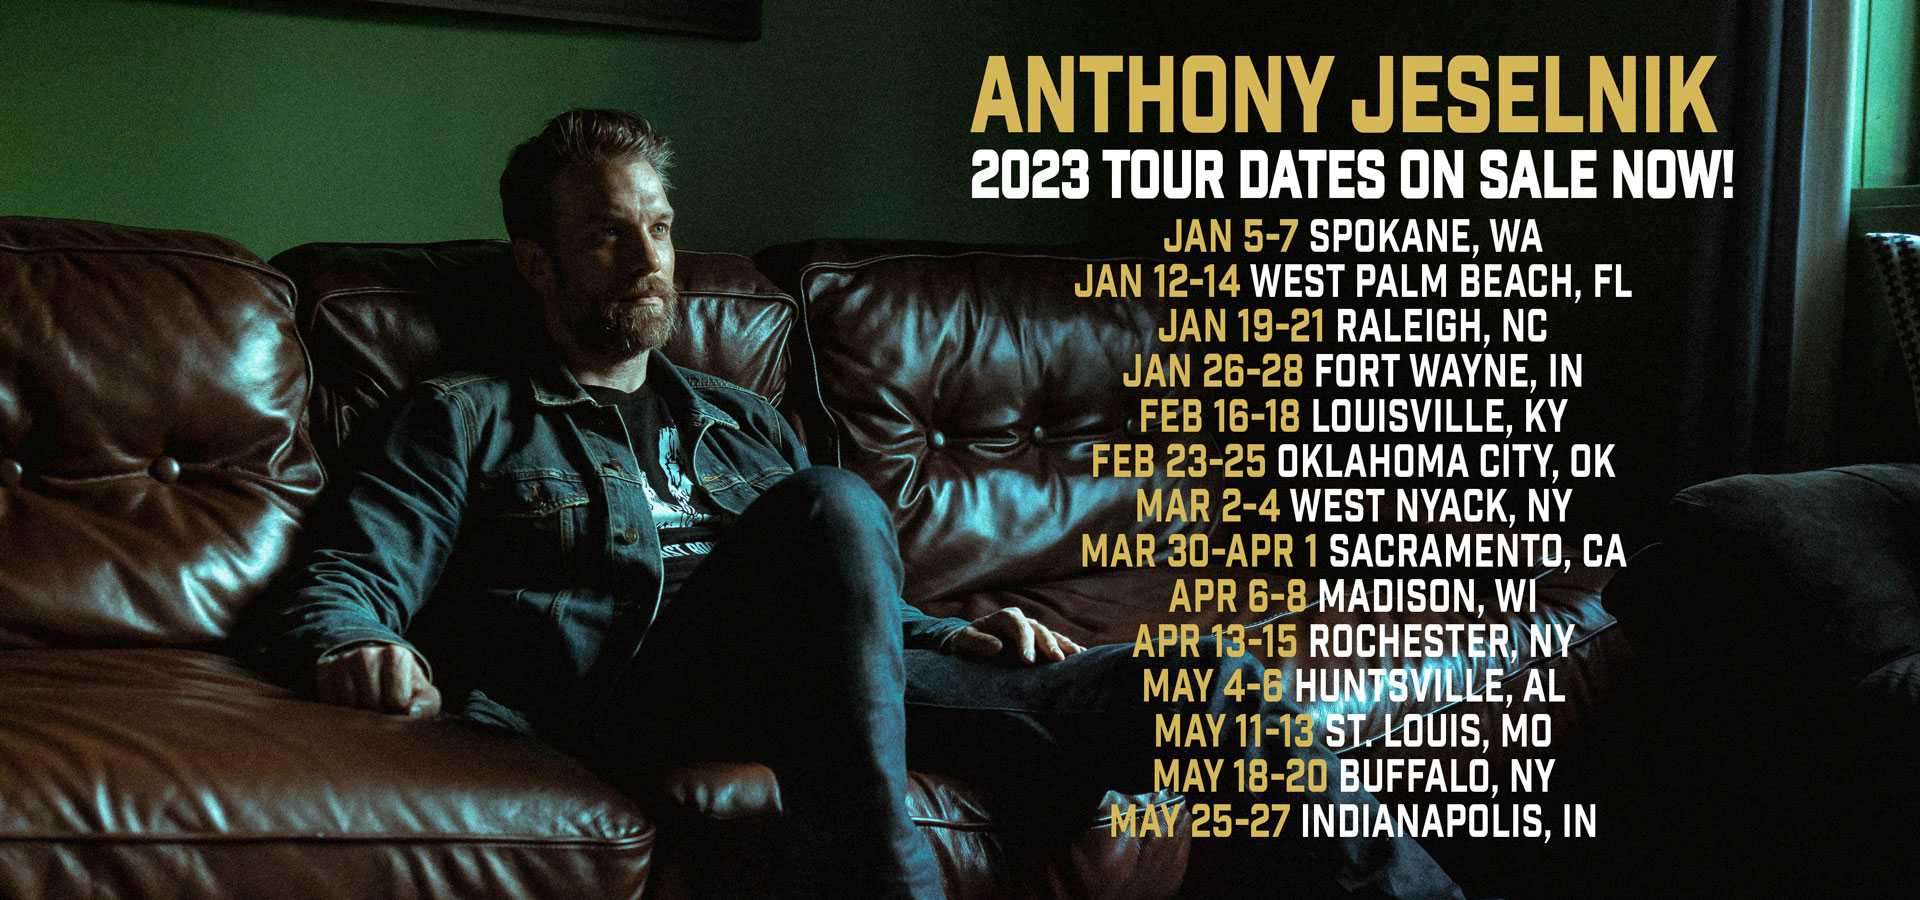 Anthony Jeselnik 2023 Tour Dates On Sale Now!